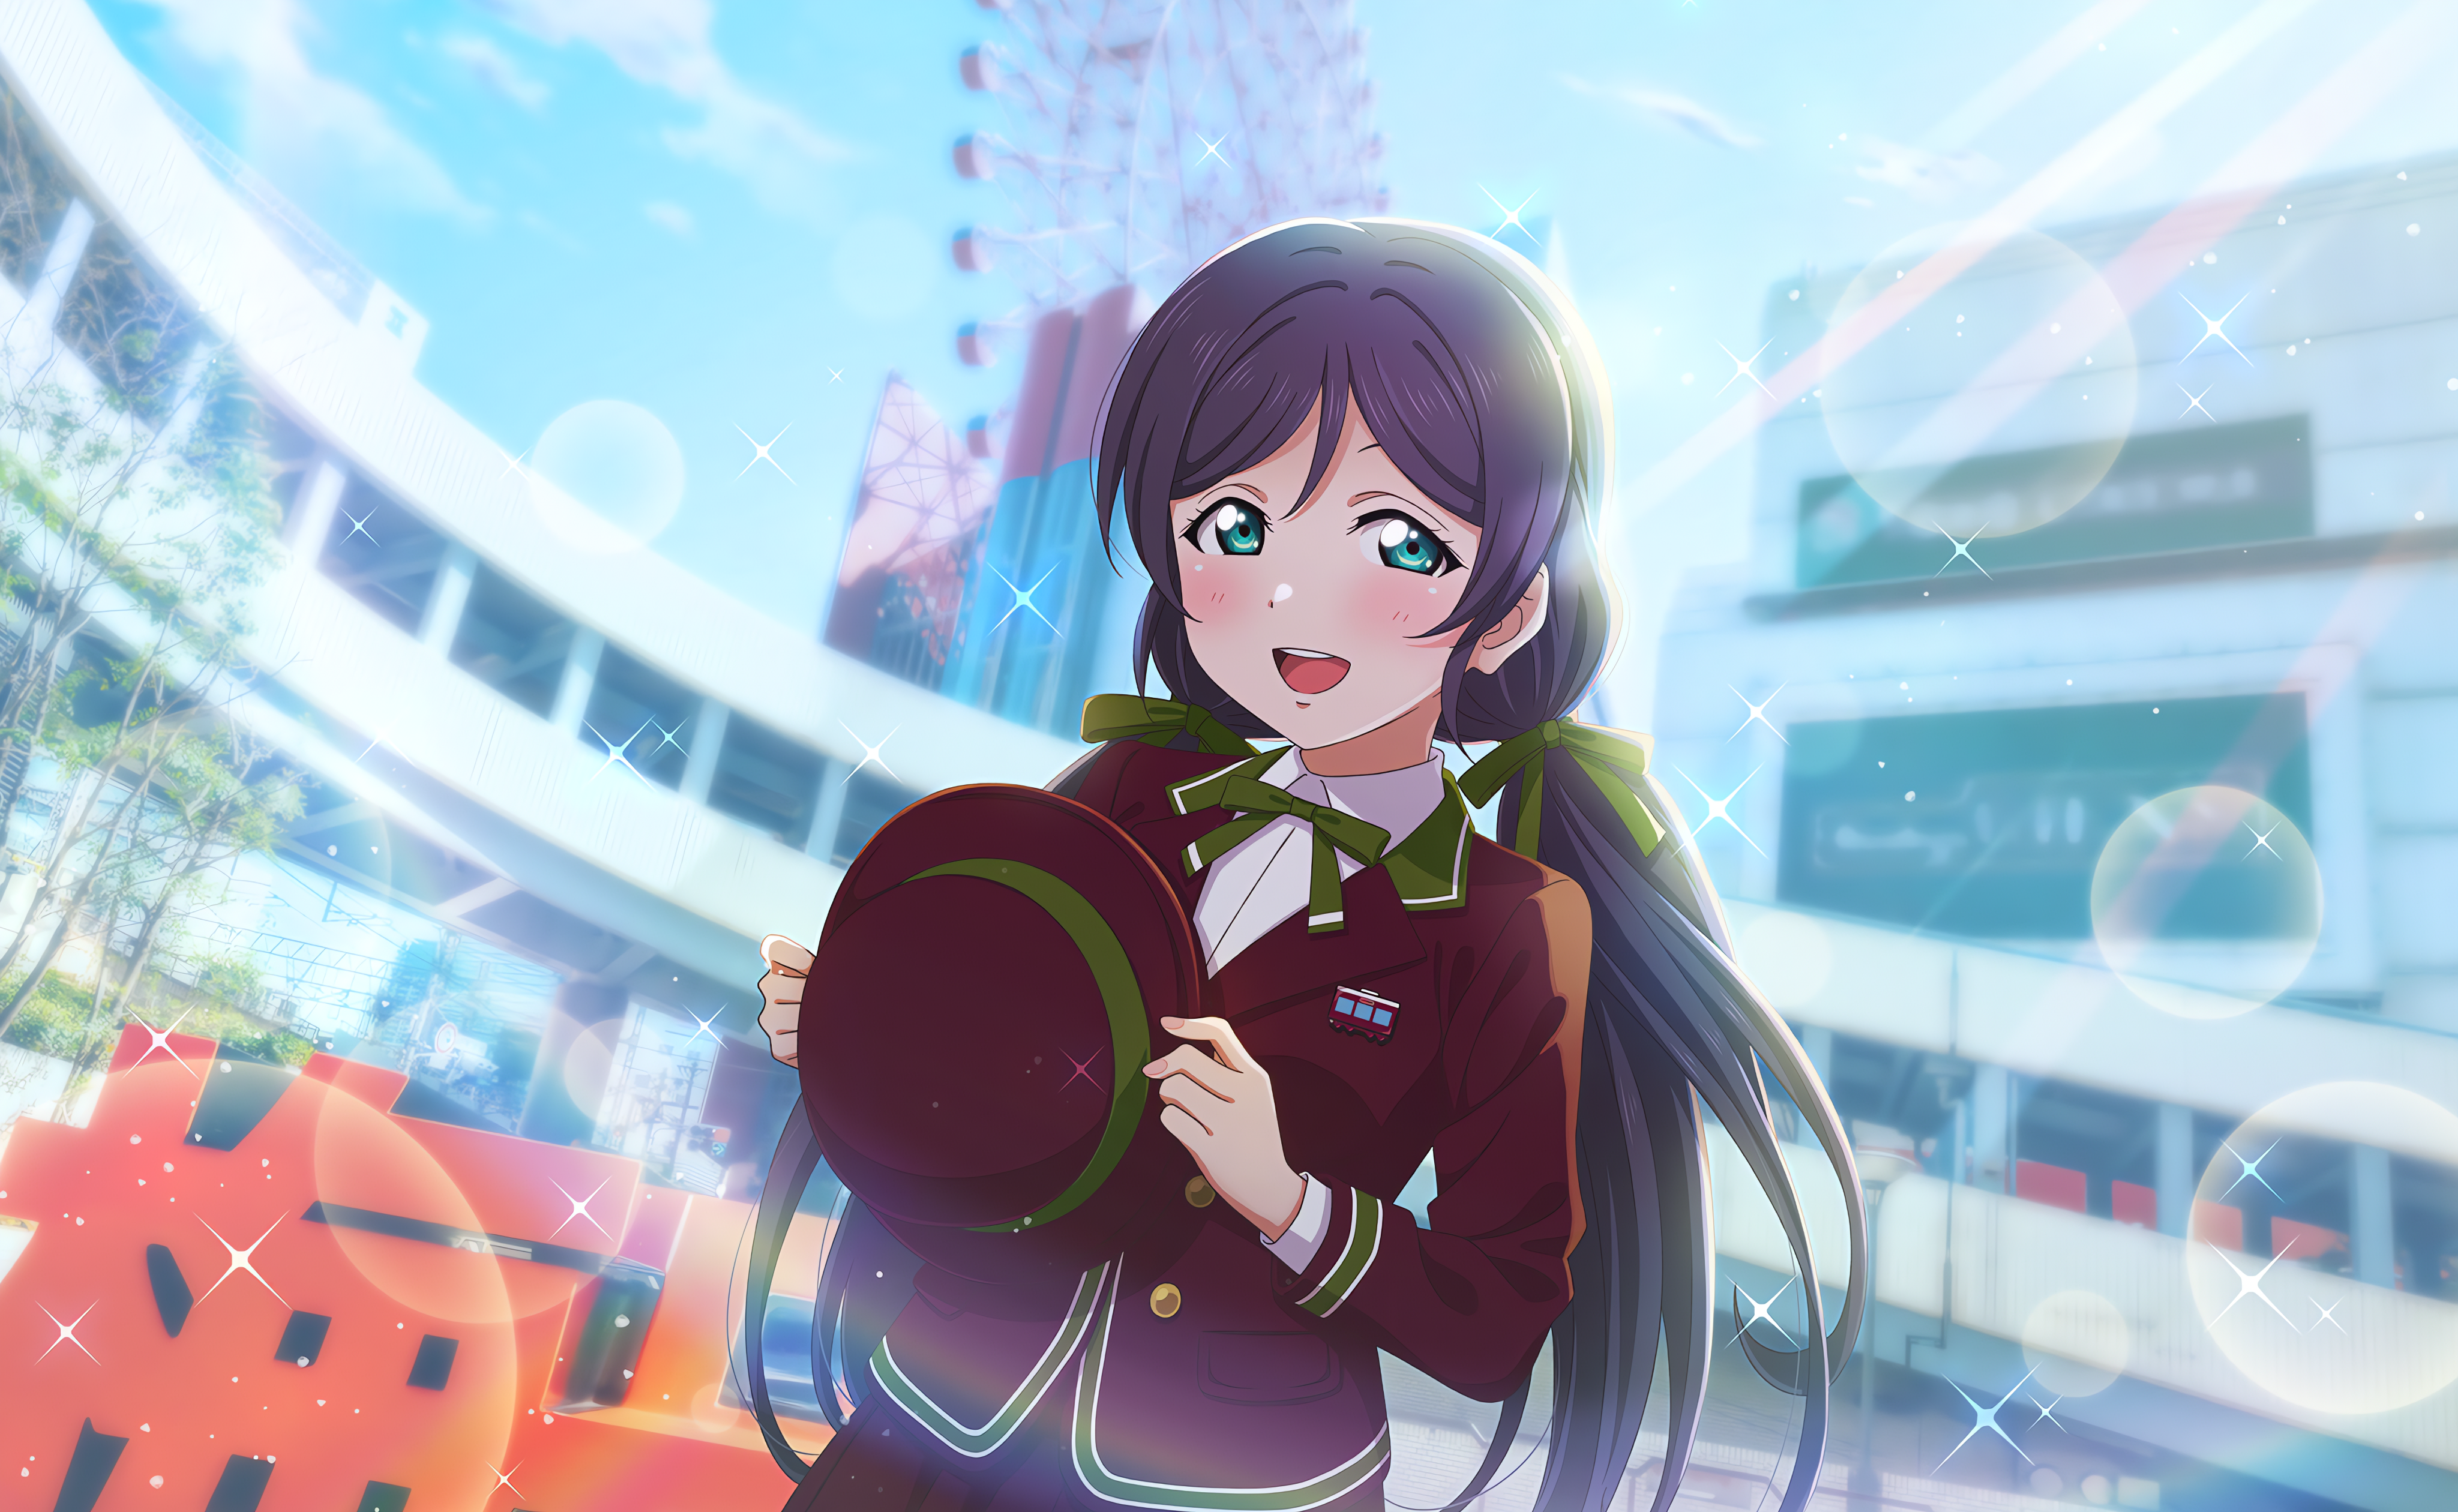 Anime 4096x2520 Toujou Nozomi Love Live! anime anime girls long hair hat schoolgirl school uniform blushing looking at viewer stars sunlight building ferris wheel bow tie standing twintails